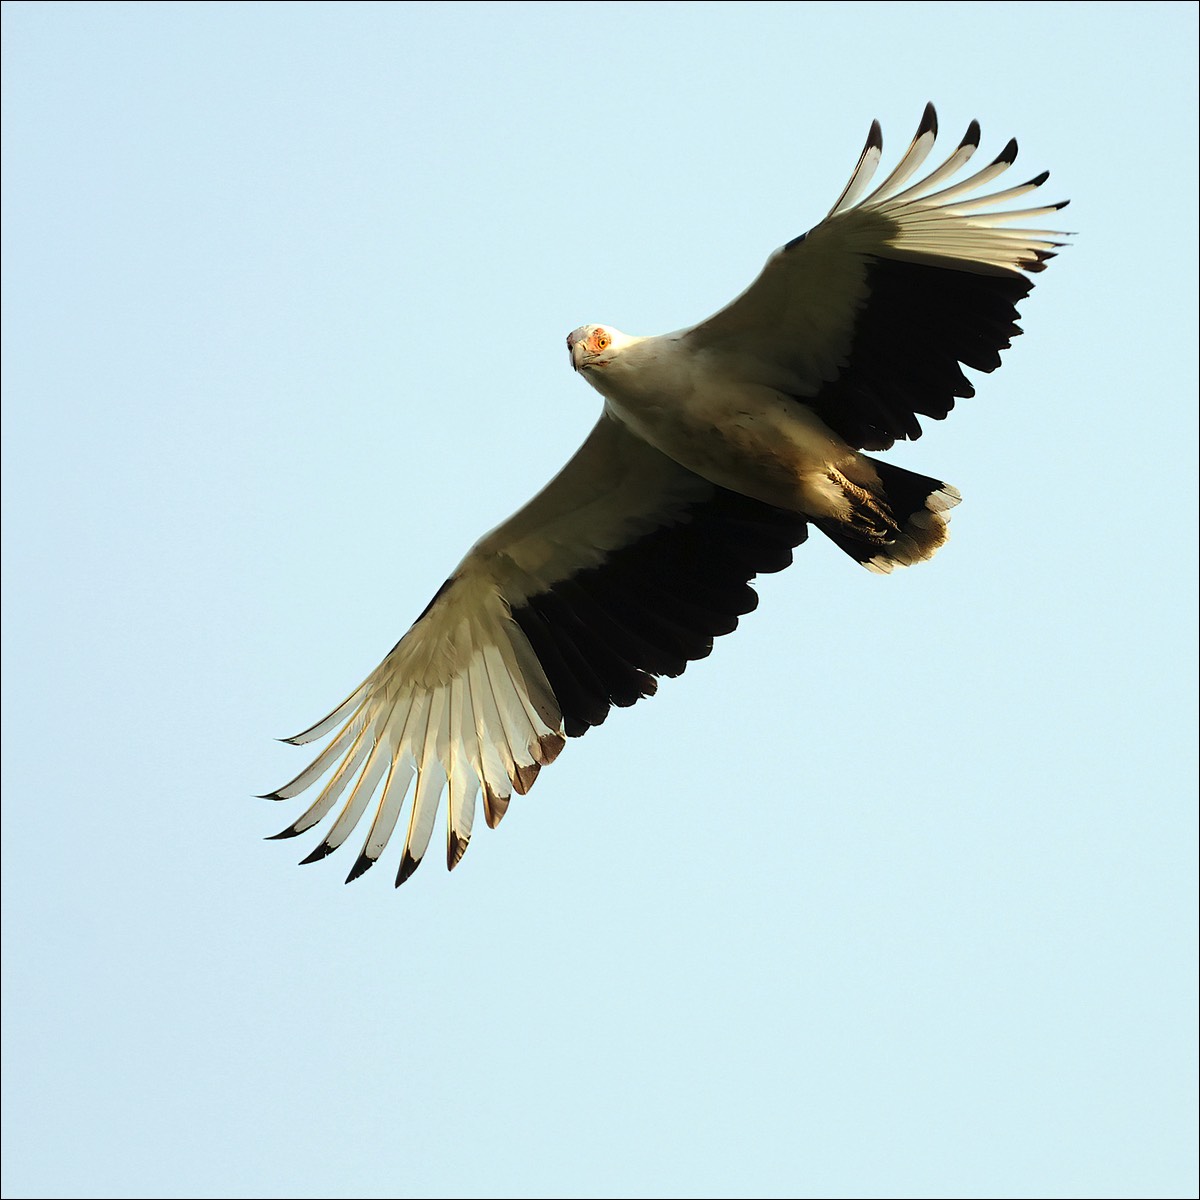 Palm Vulture (Palmgier)